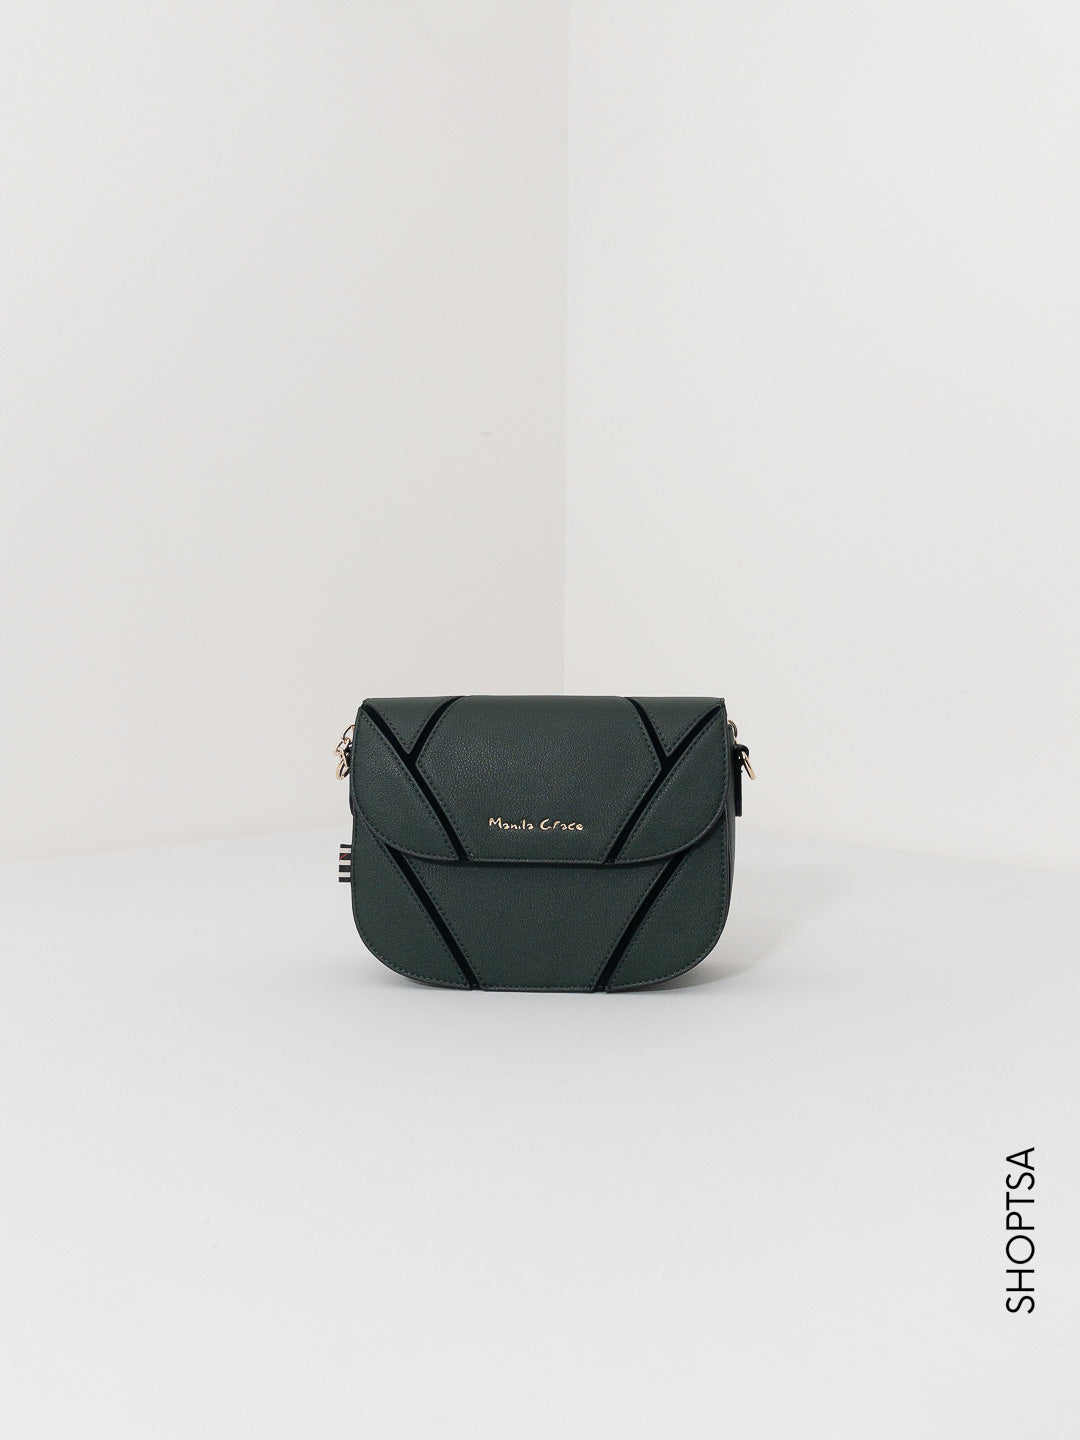 Elara geometric shoulder bag - MANILA GRACE